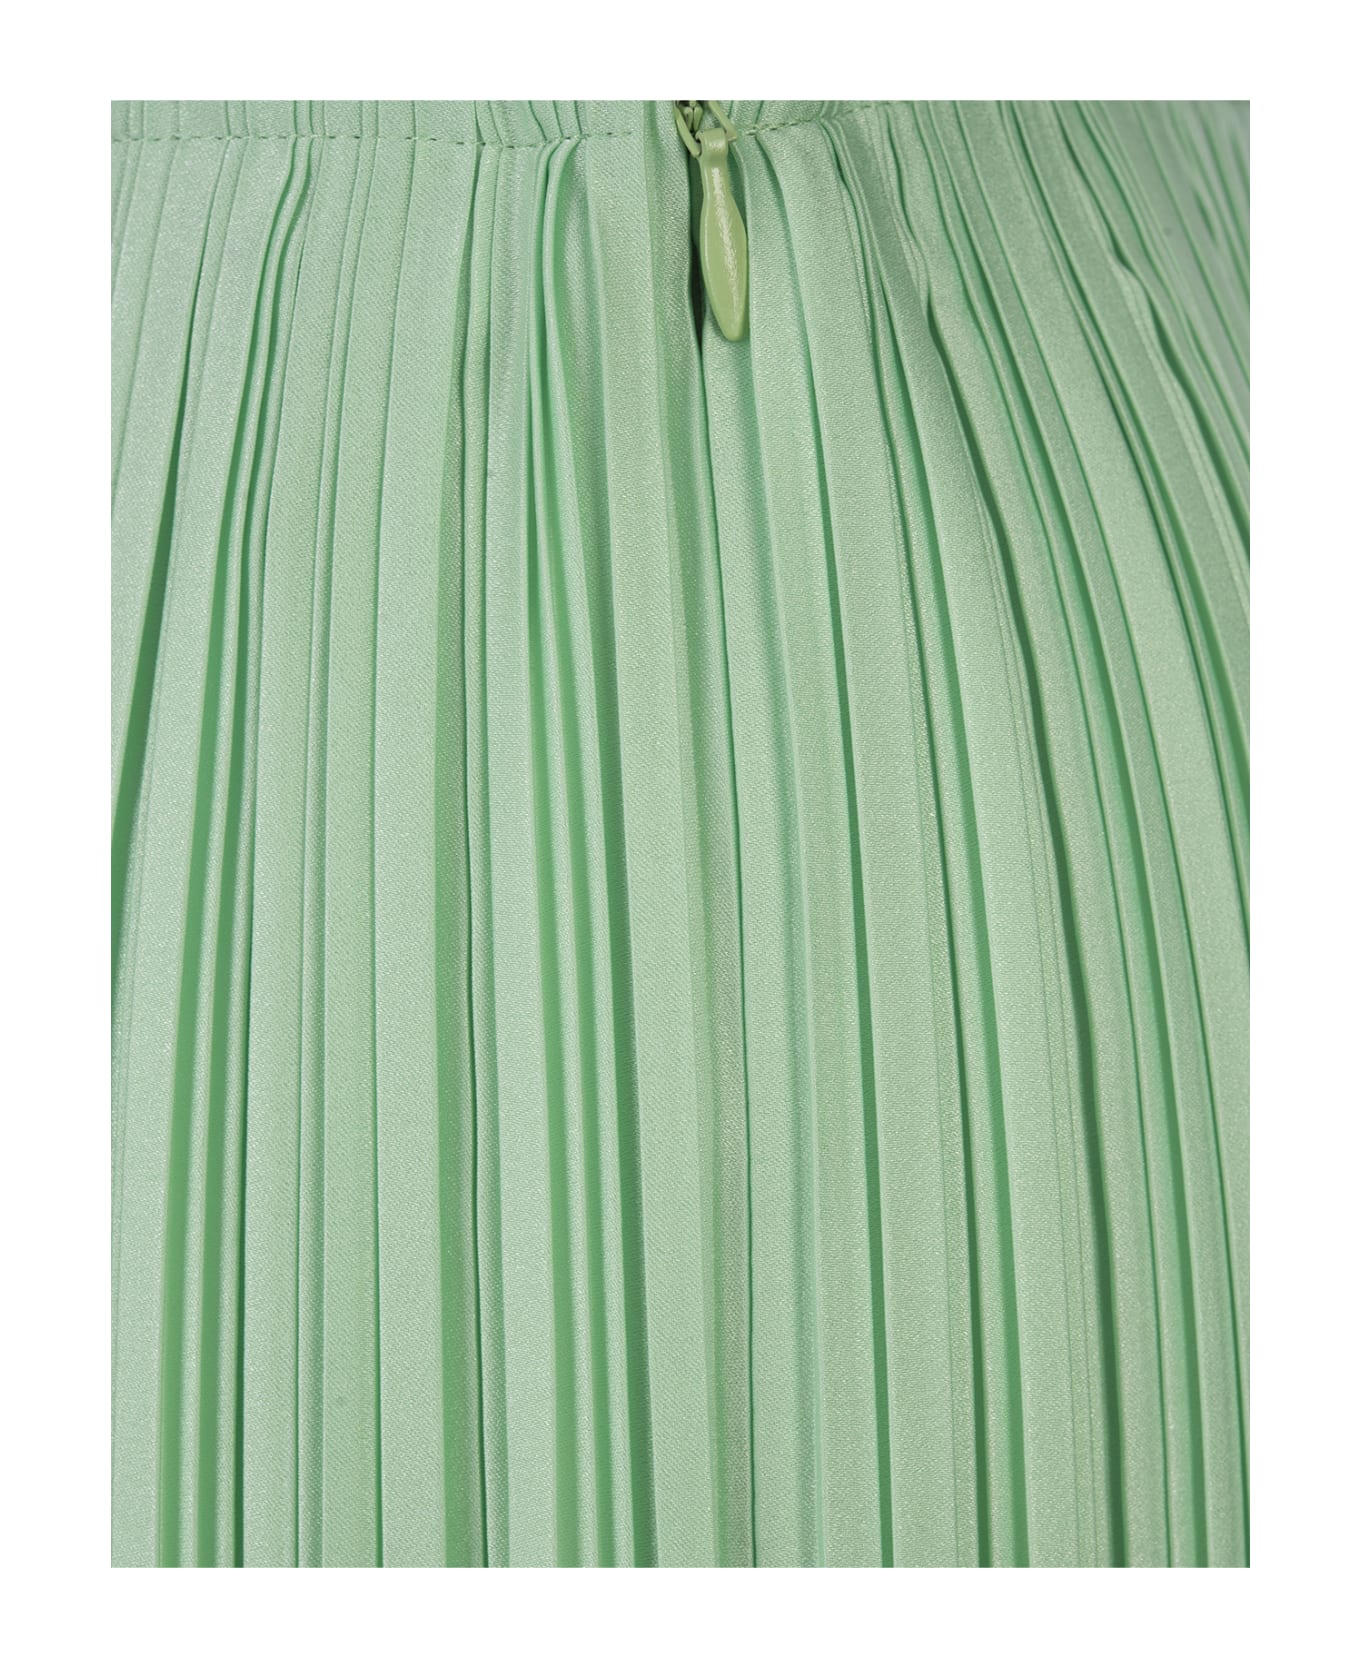 Lanvin Green Satin Asymmetrical Midi Skirt - Green